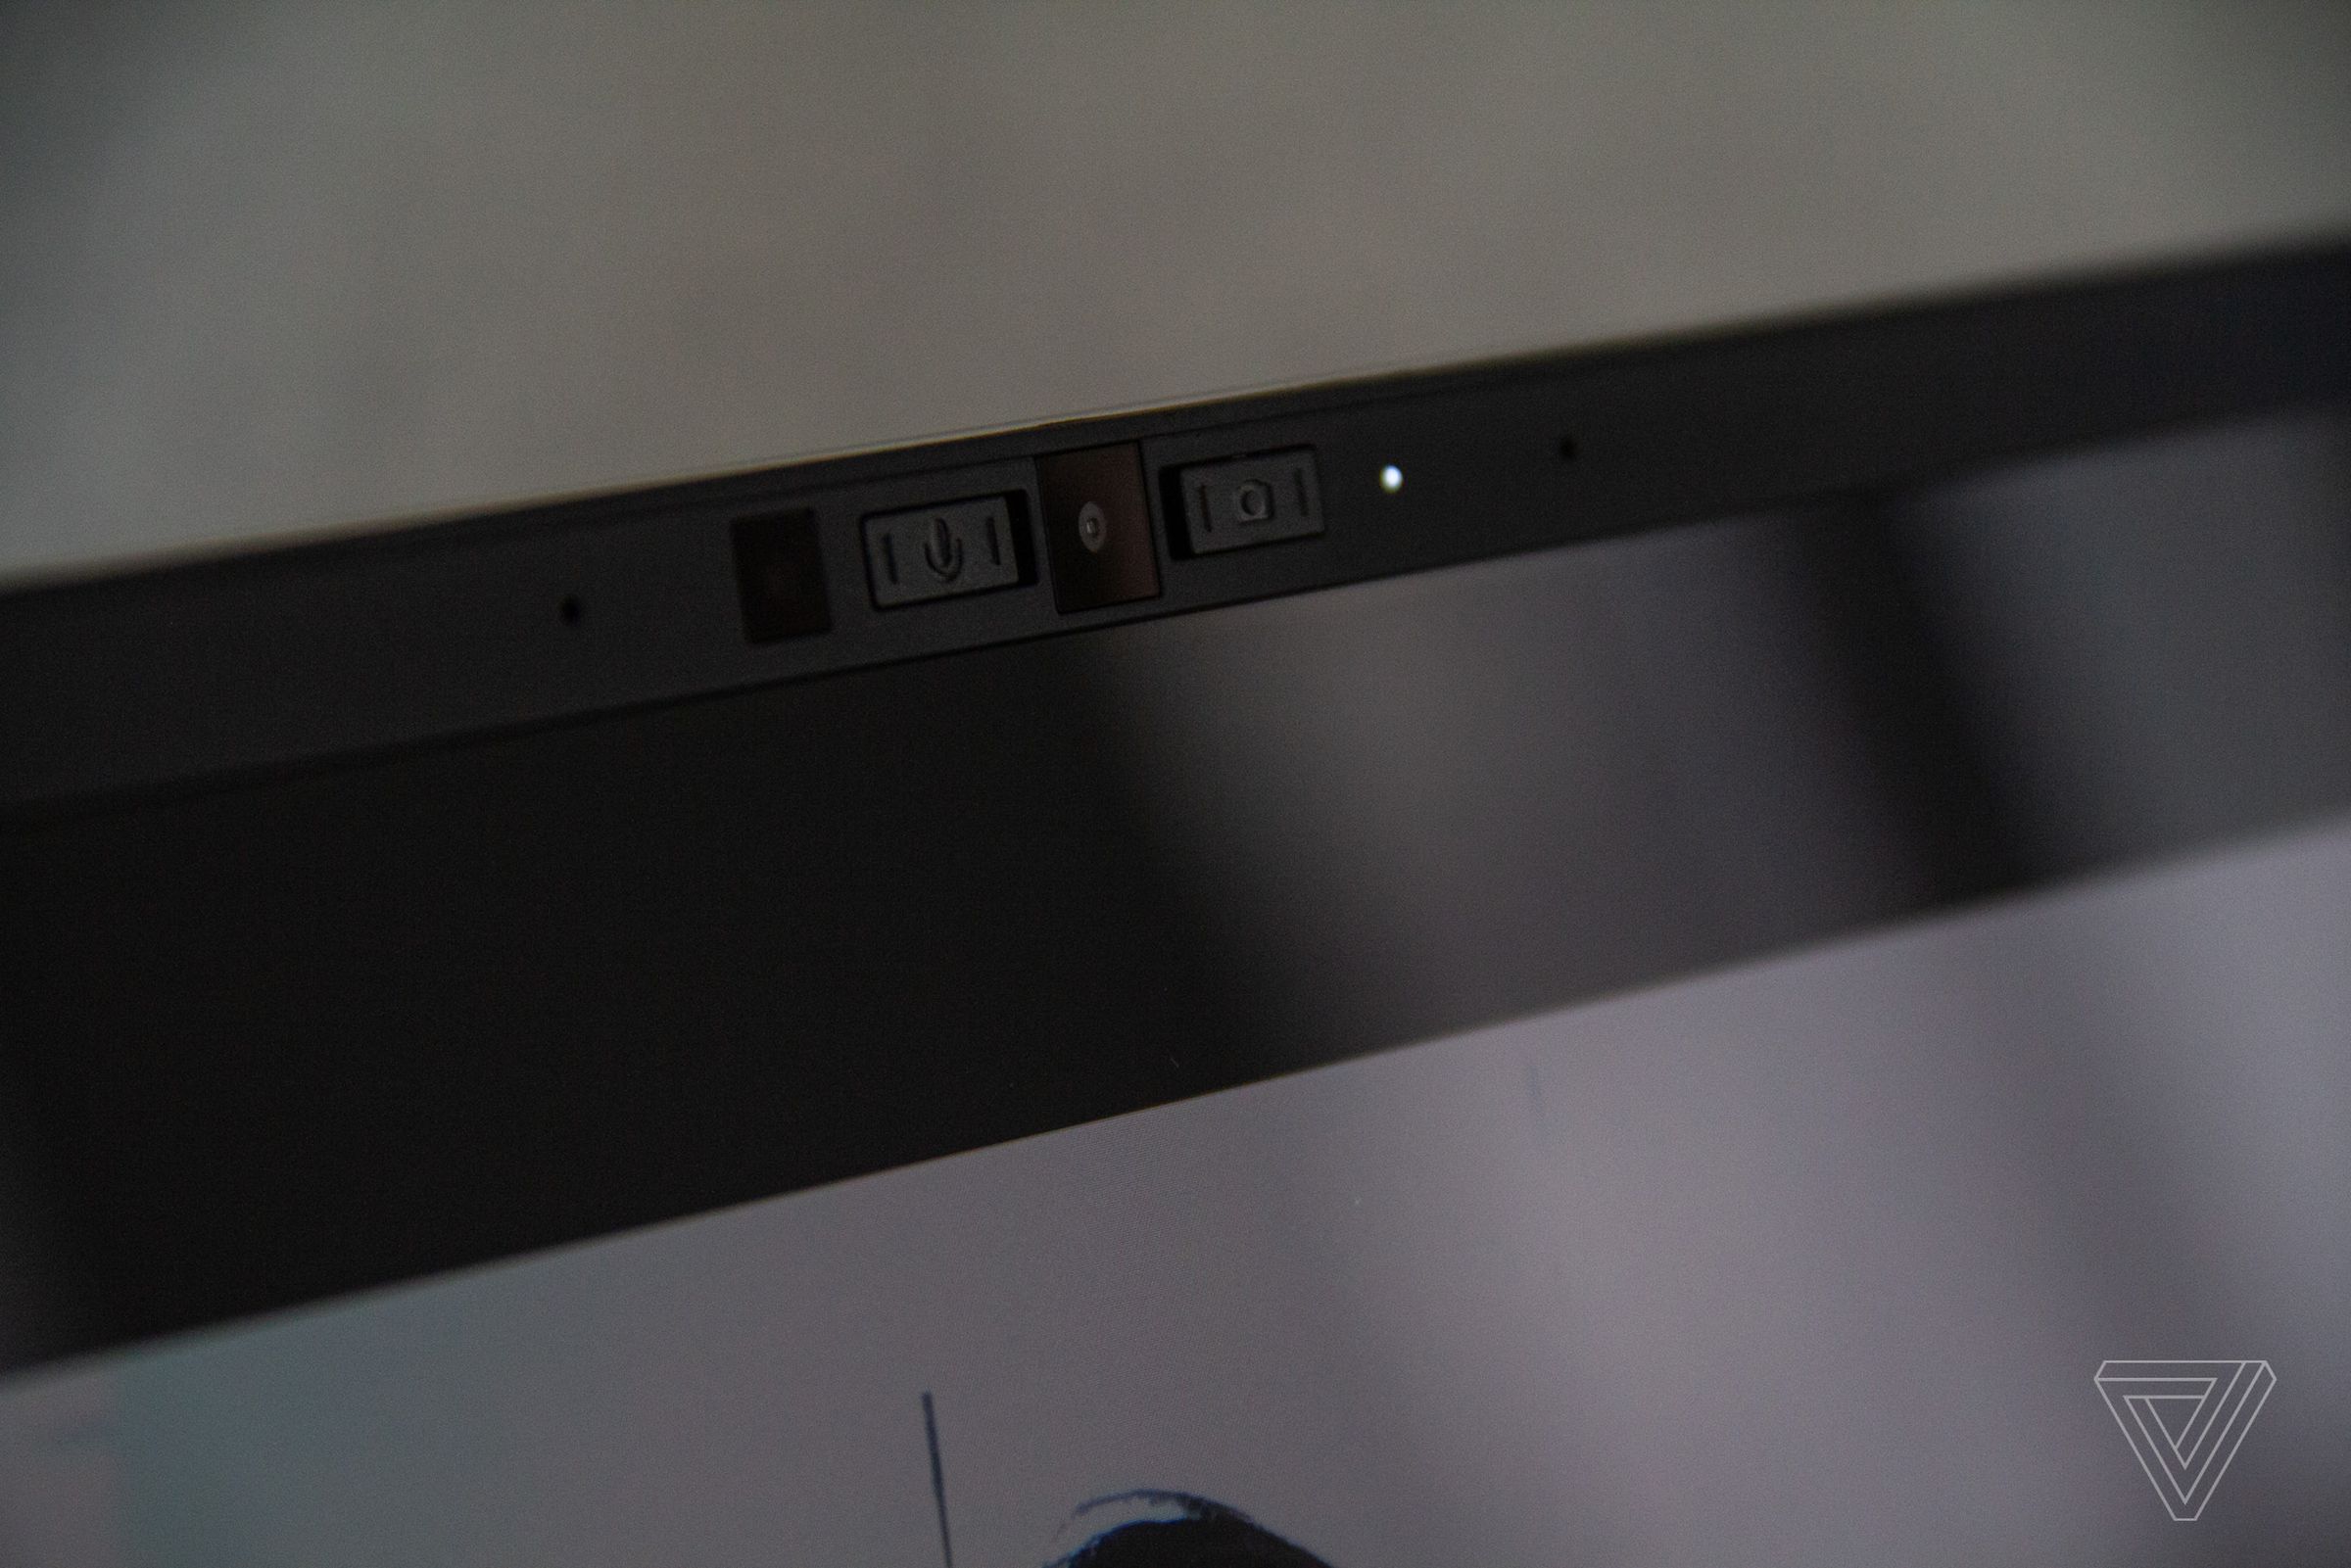 The webcam of the Framework Laptop with the indicator light illuminated.